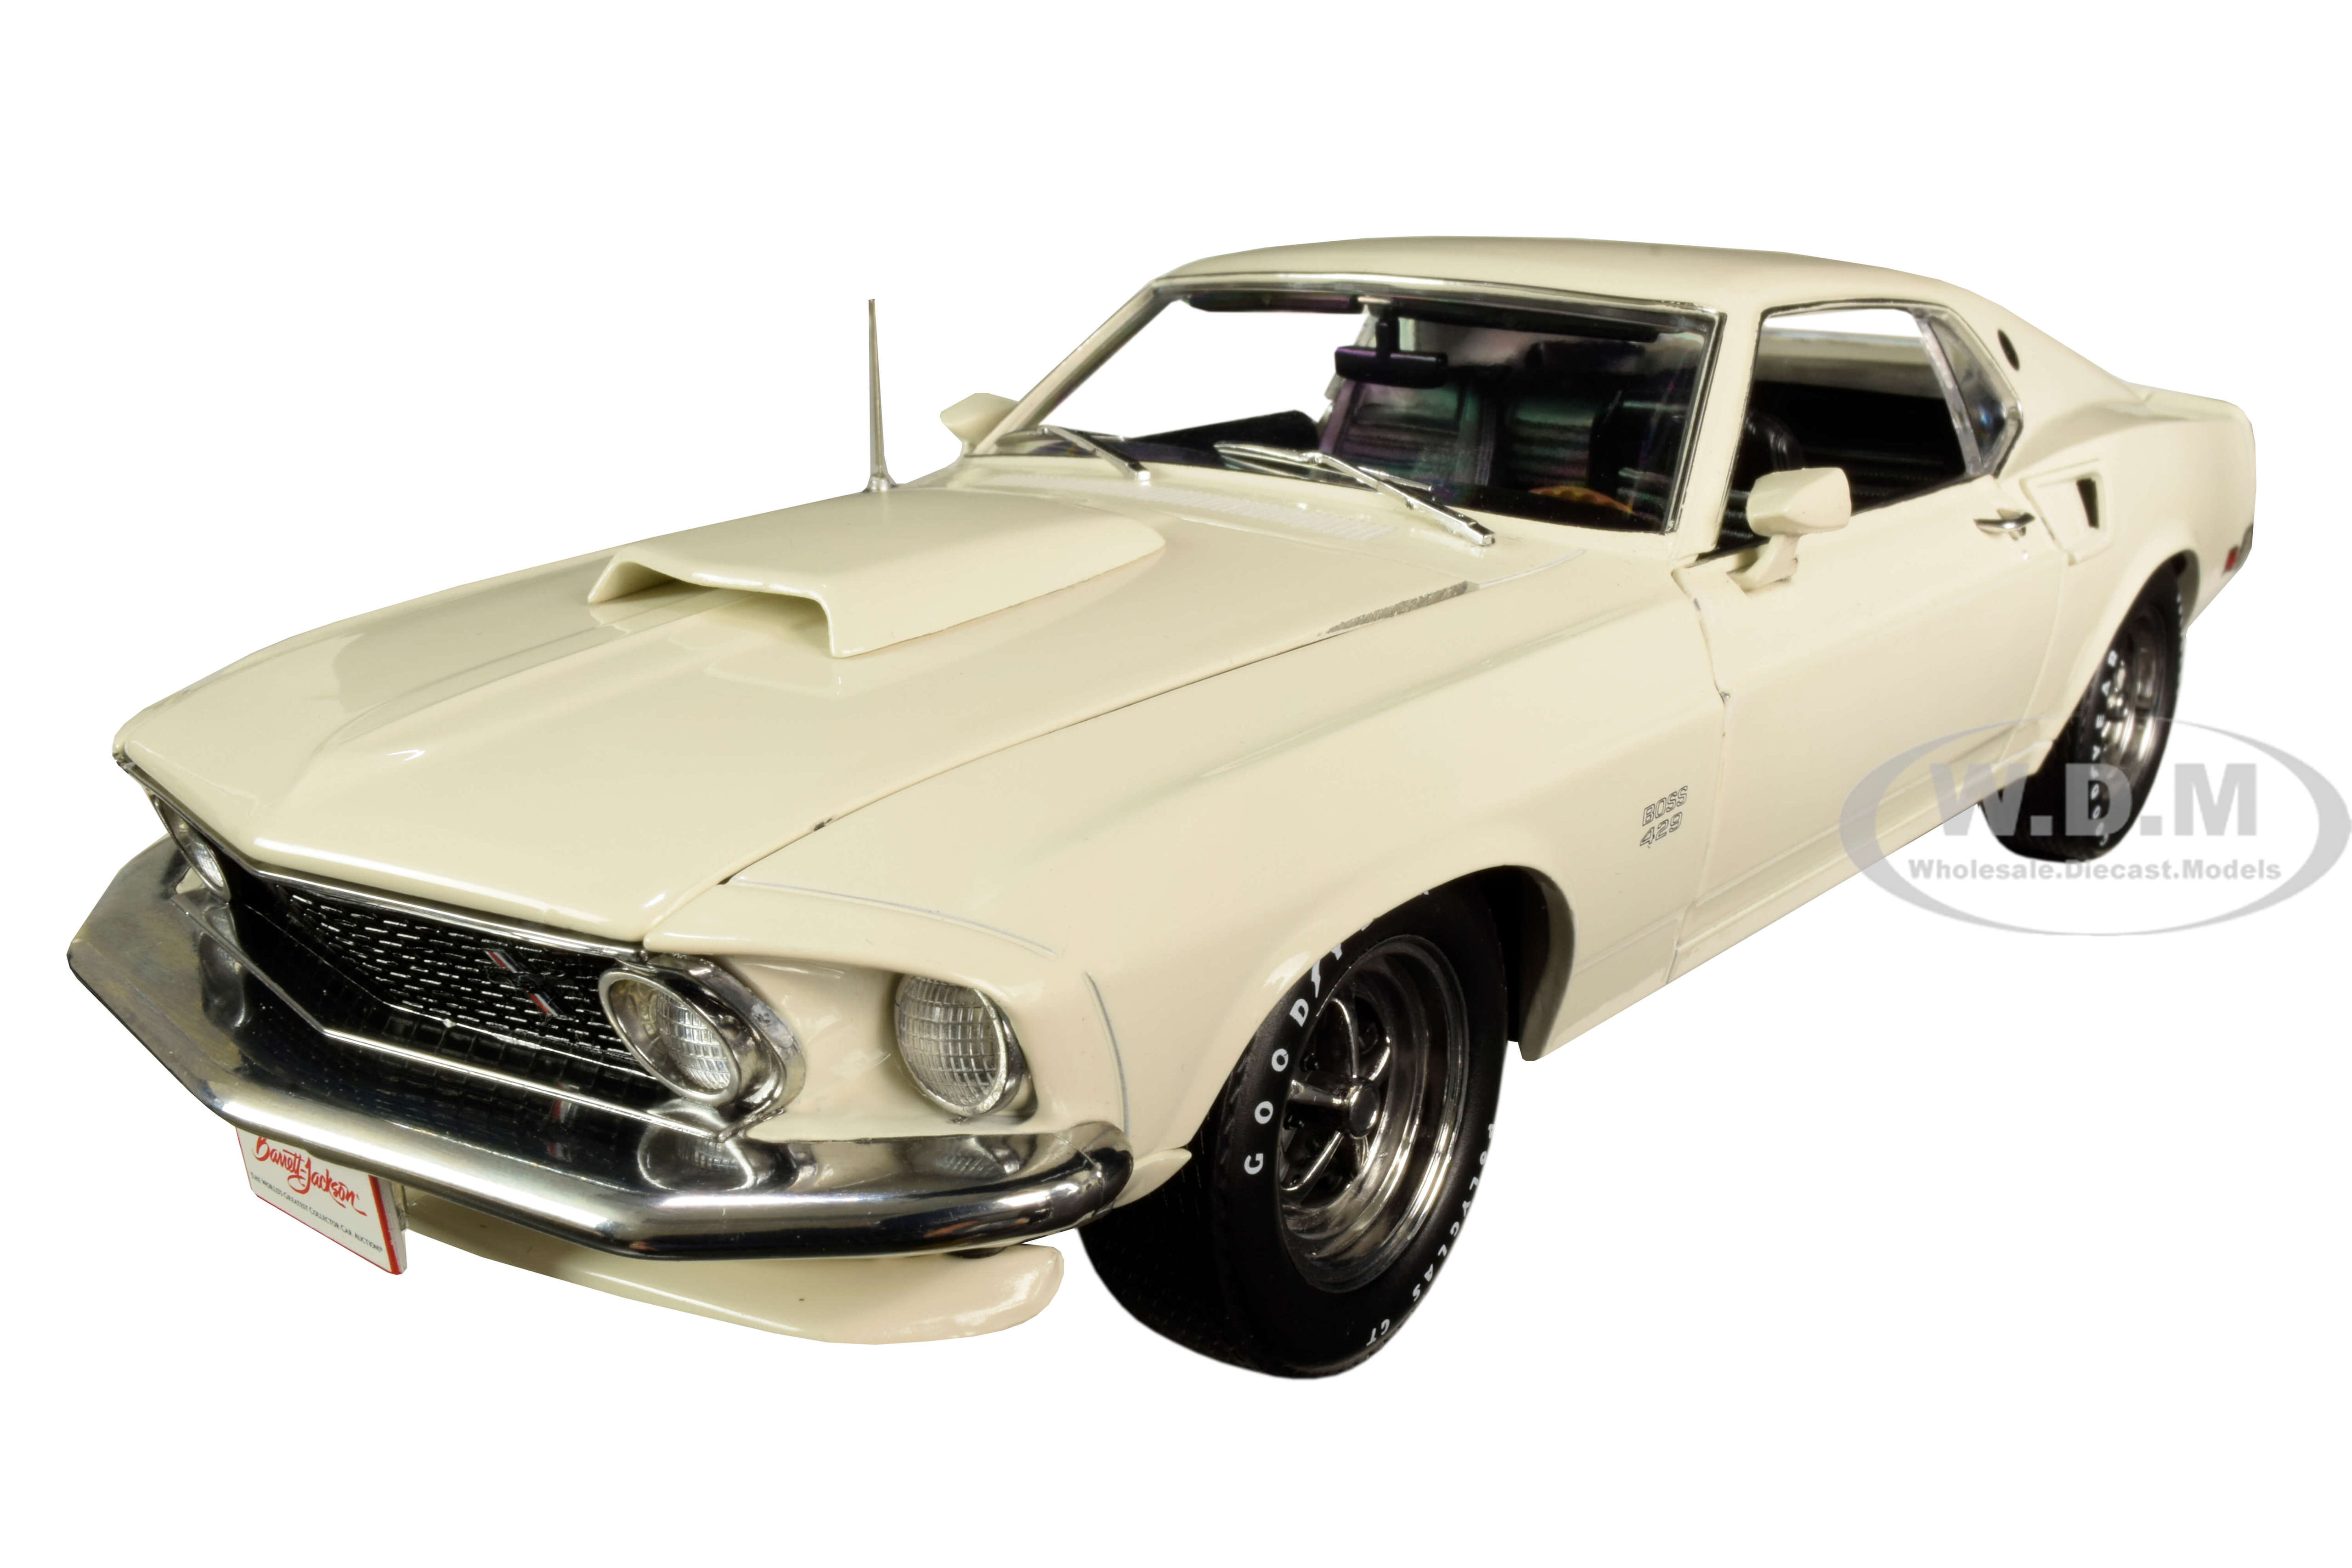 1969 Ford Mustang BOSS 429 Wimbledon White (Lot 1410) "Barrett-Jackson Scottsdale" (2018) 1/18 Diecast Model Car by Highway 61